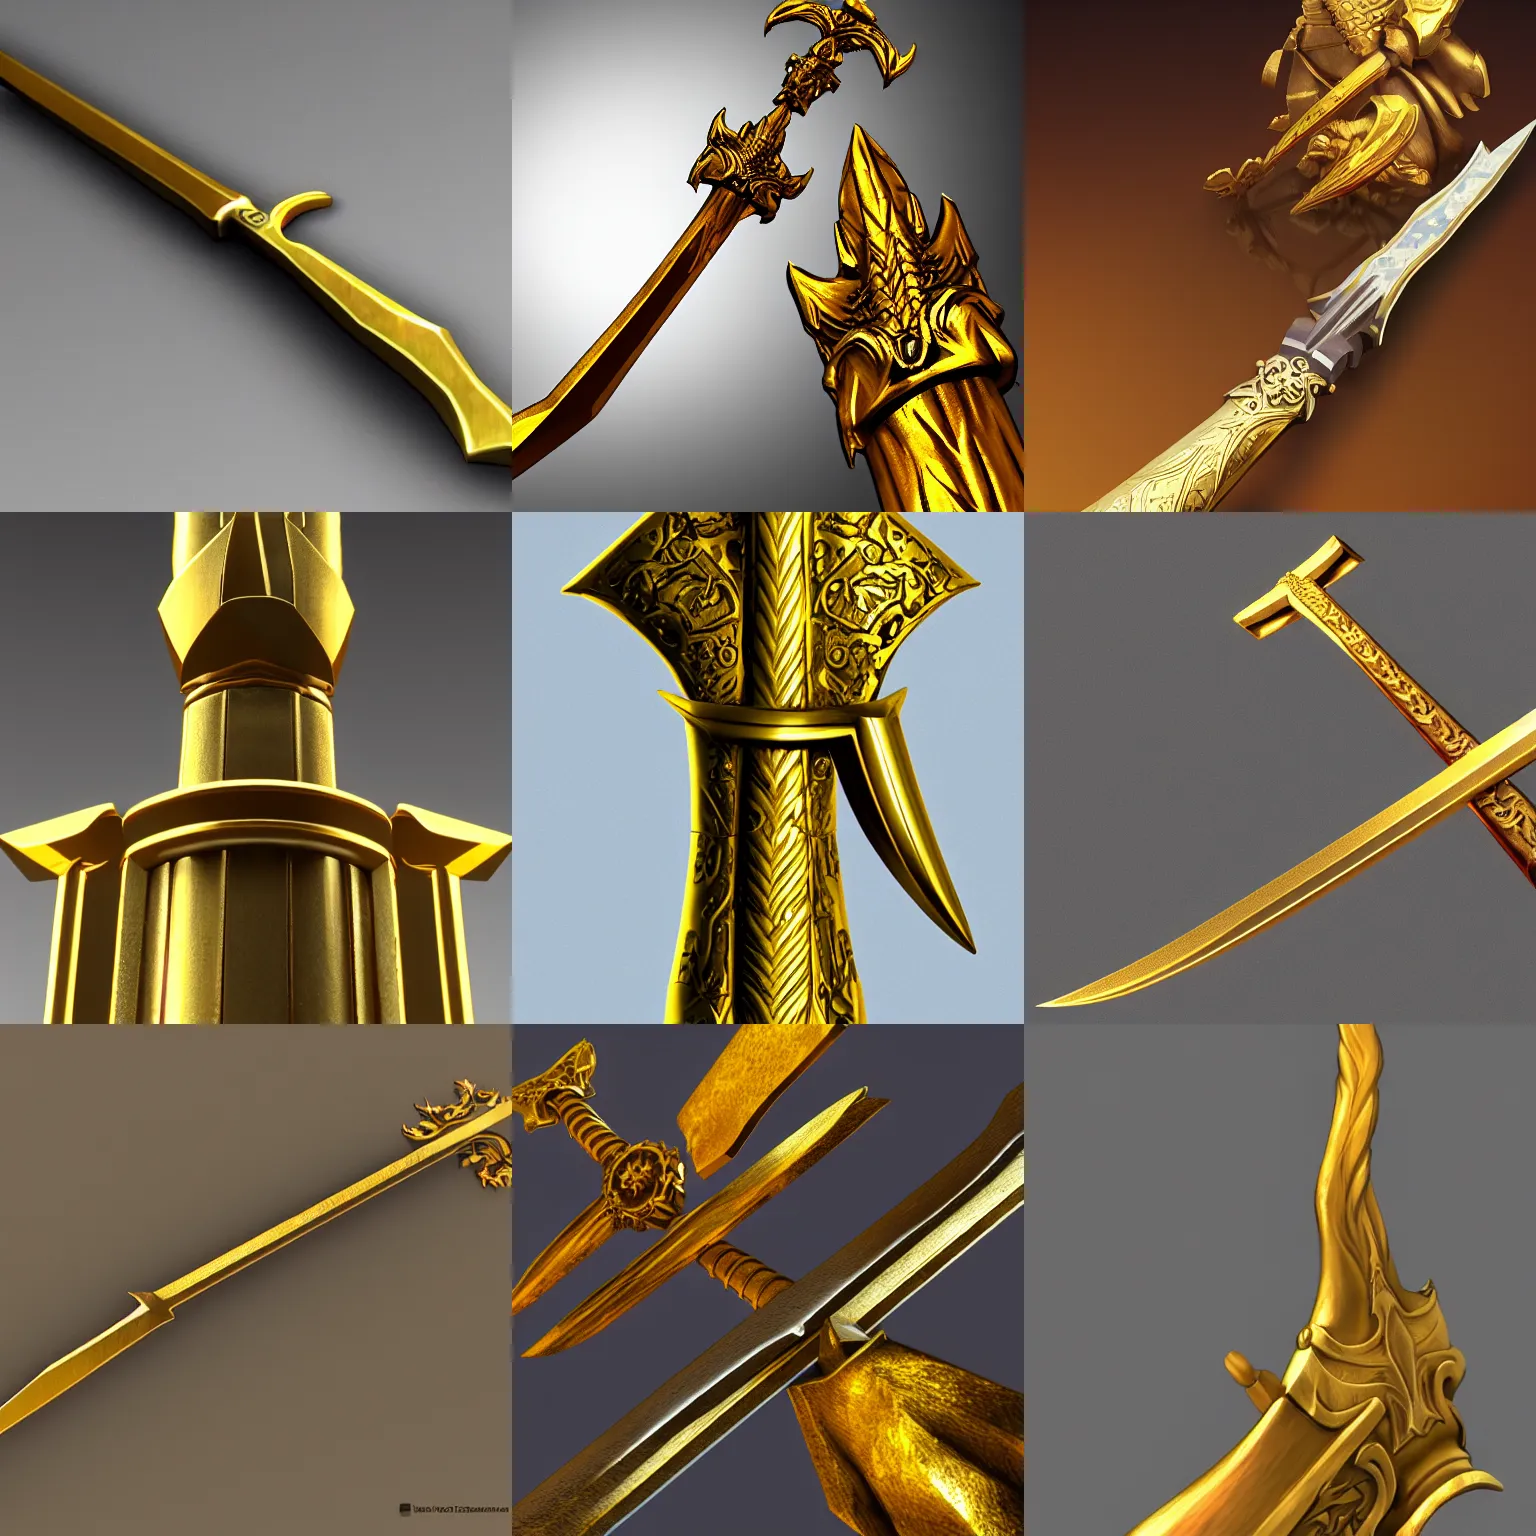 Prompt: cool golden great sword, artstation, 8 k, interesting angle